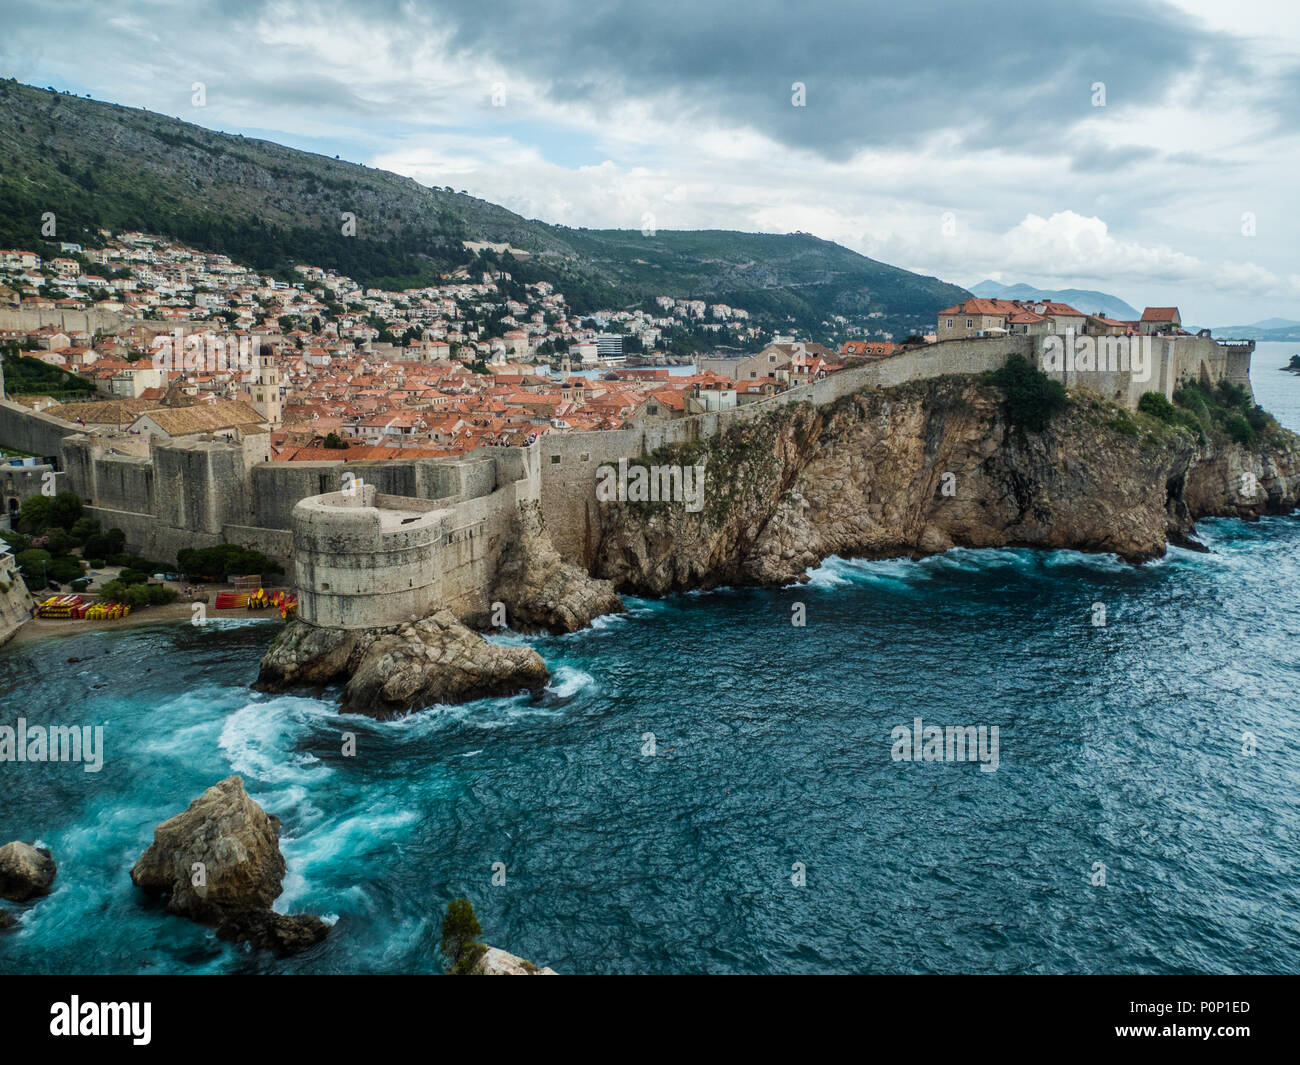 The hilltop city of Dubrovnik in Croatia aka 'Kings Landing', overlooking the Adriatic Sea Stock Photo